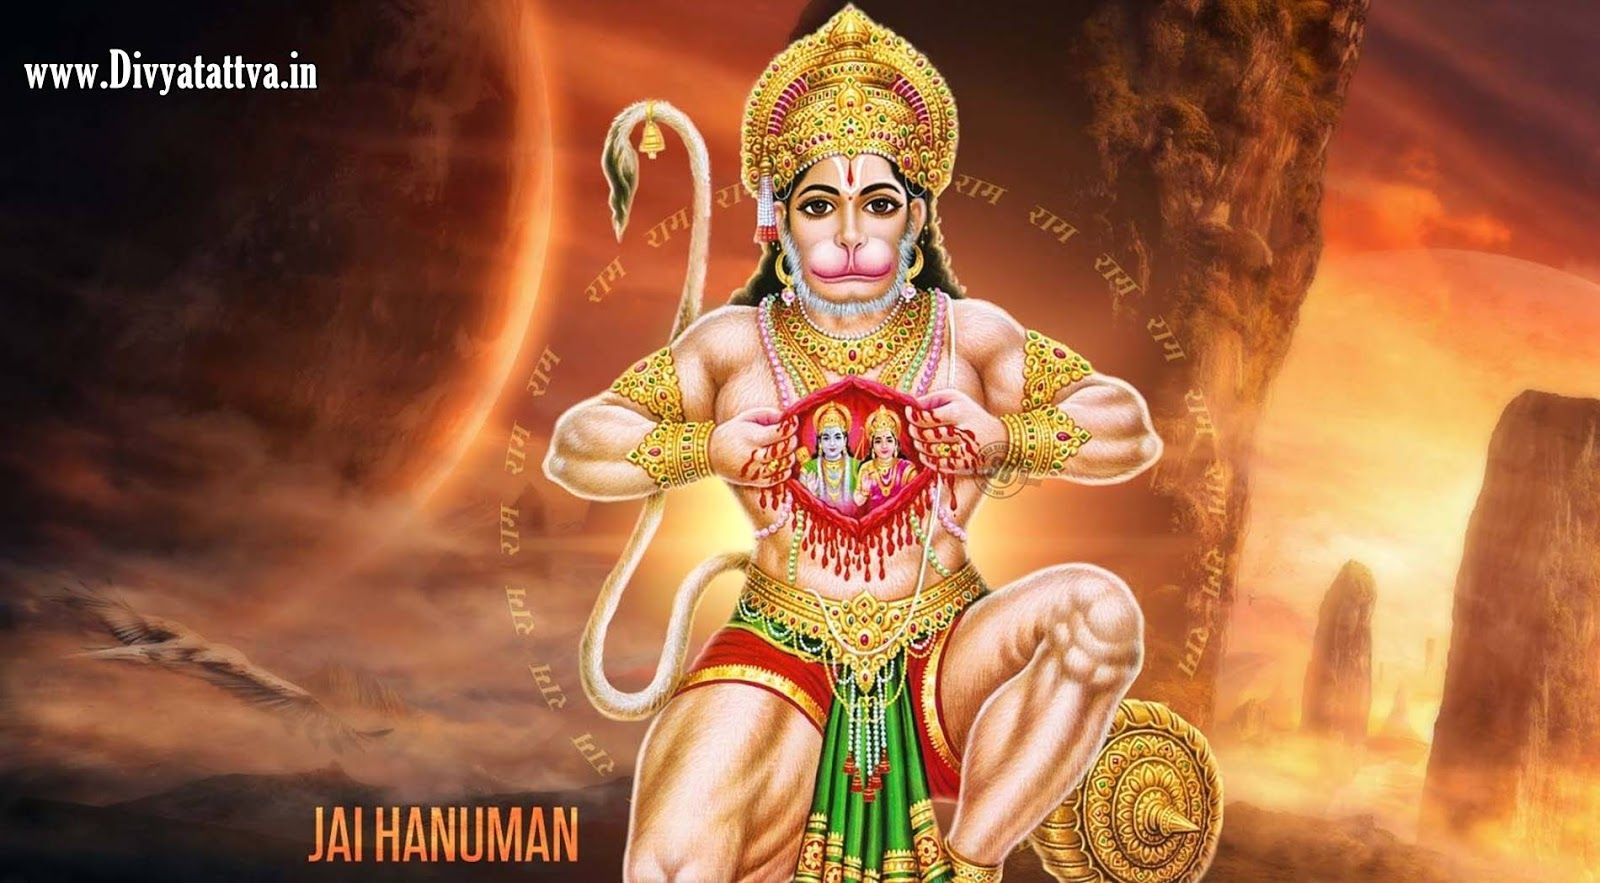 Divyatattva Astrology Free Horoscopes Psychic Tarot Yoga Tantra Occult Image Videos, Bajrang Bali Wallpaper God Hanuman HD Background & Photo Download